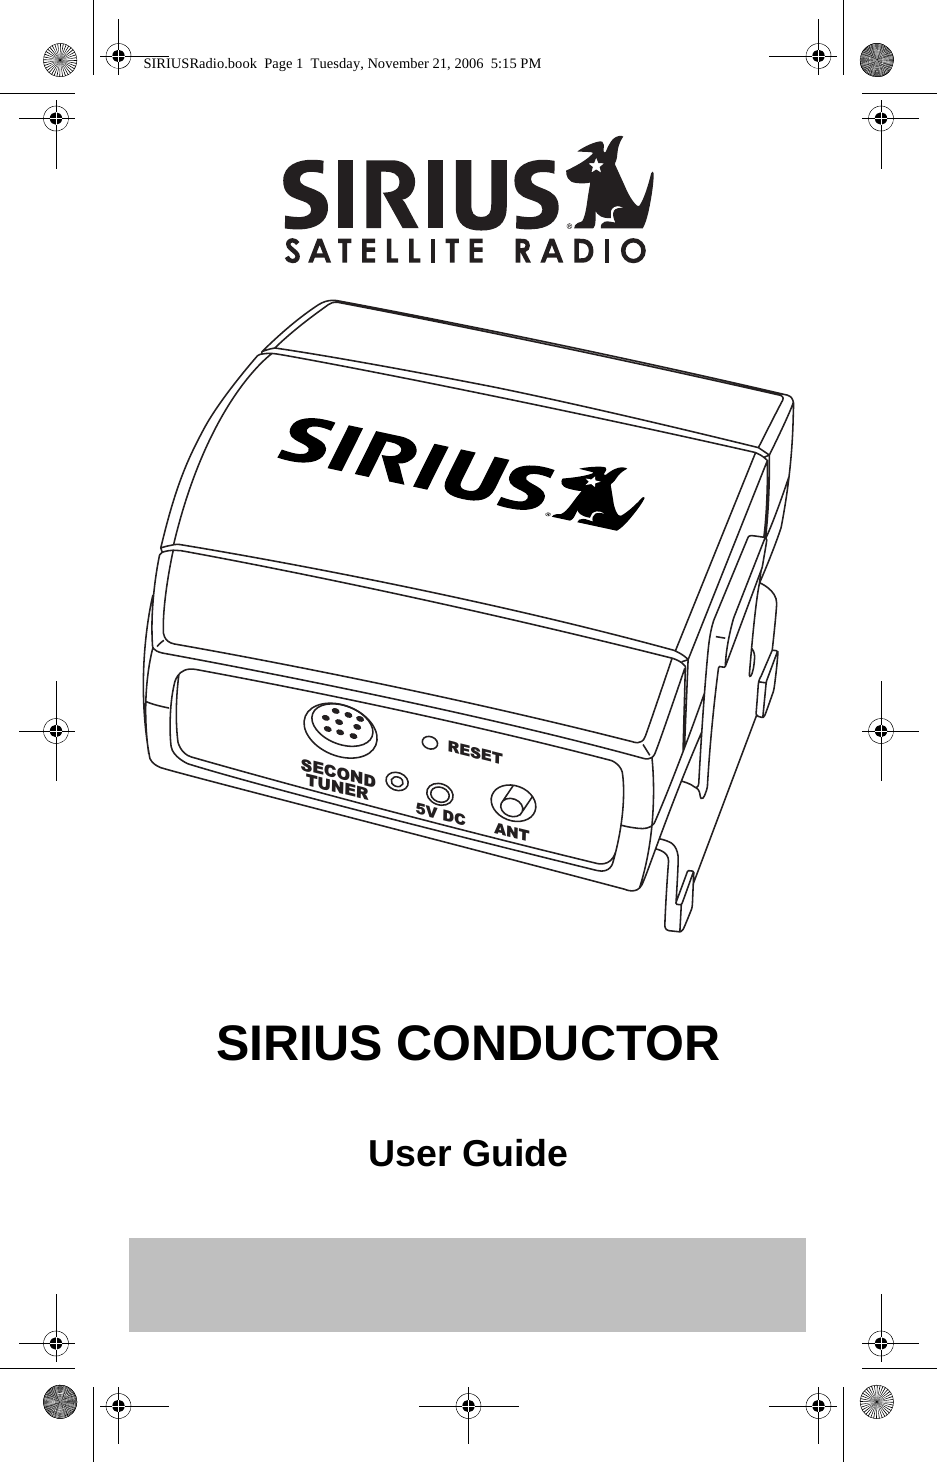 1 SIRIUS CONDUCTORUser Guide5V DC ANTRESETSECOND TUNER SIRIUSRadio.book  Page 1  Tuesday, November 21, 2006  5:15 PM